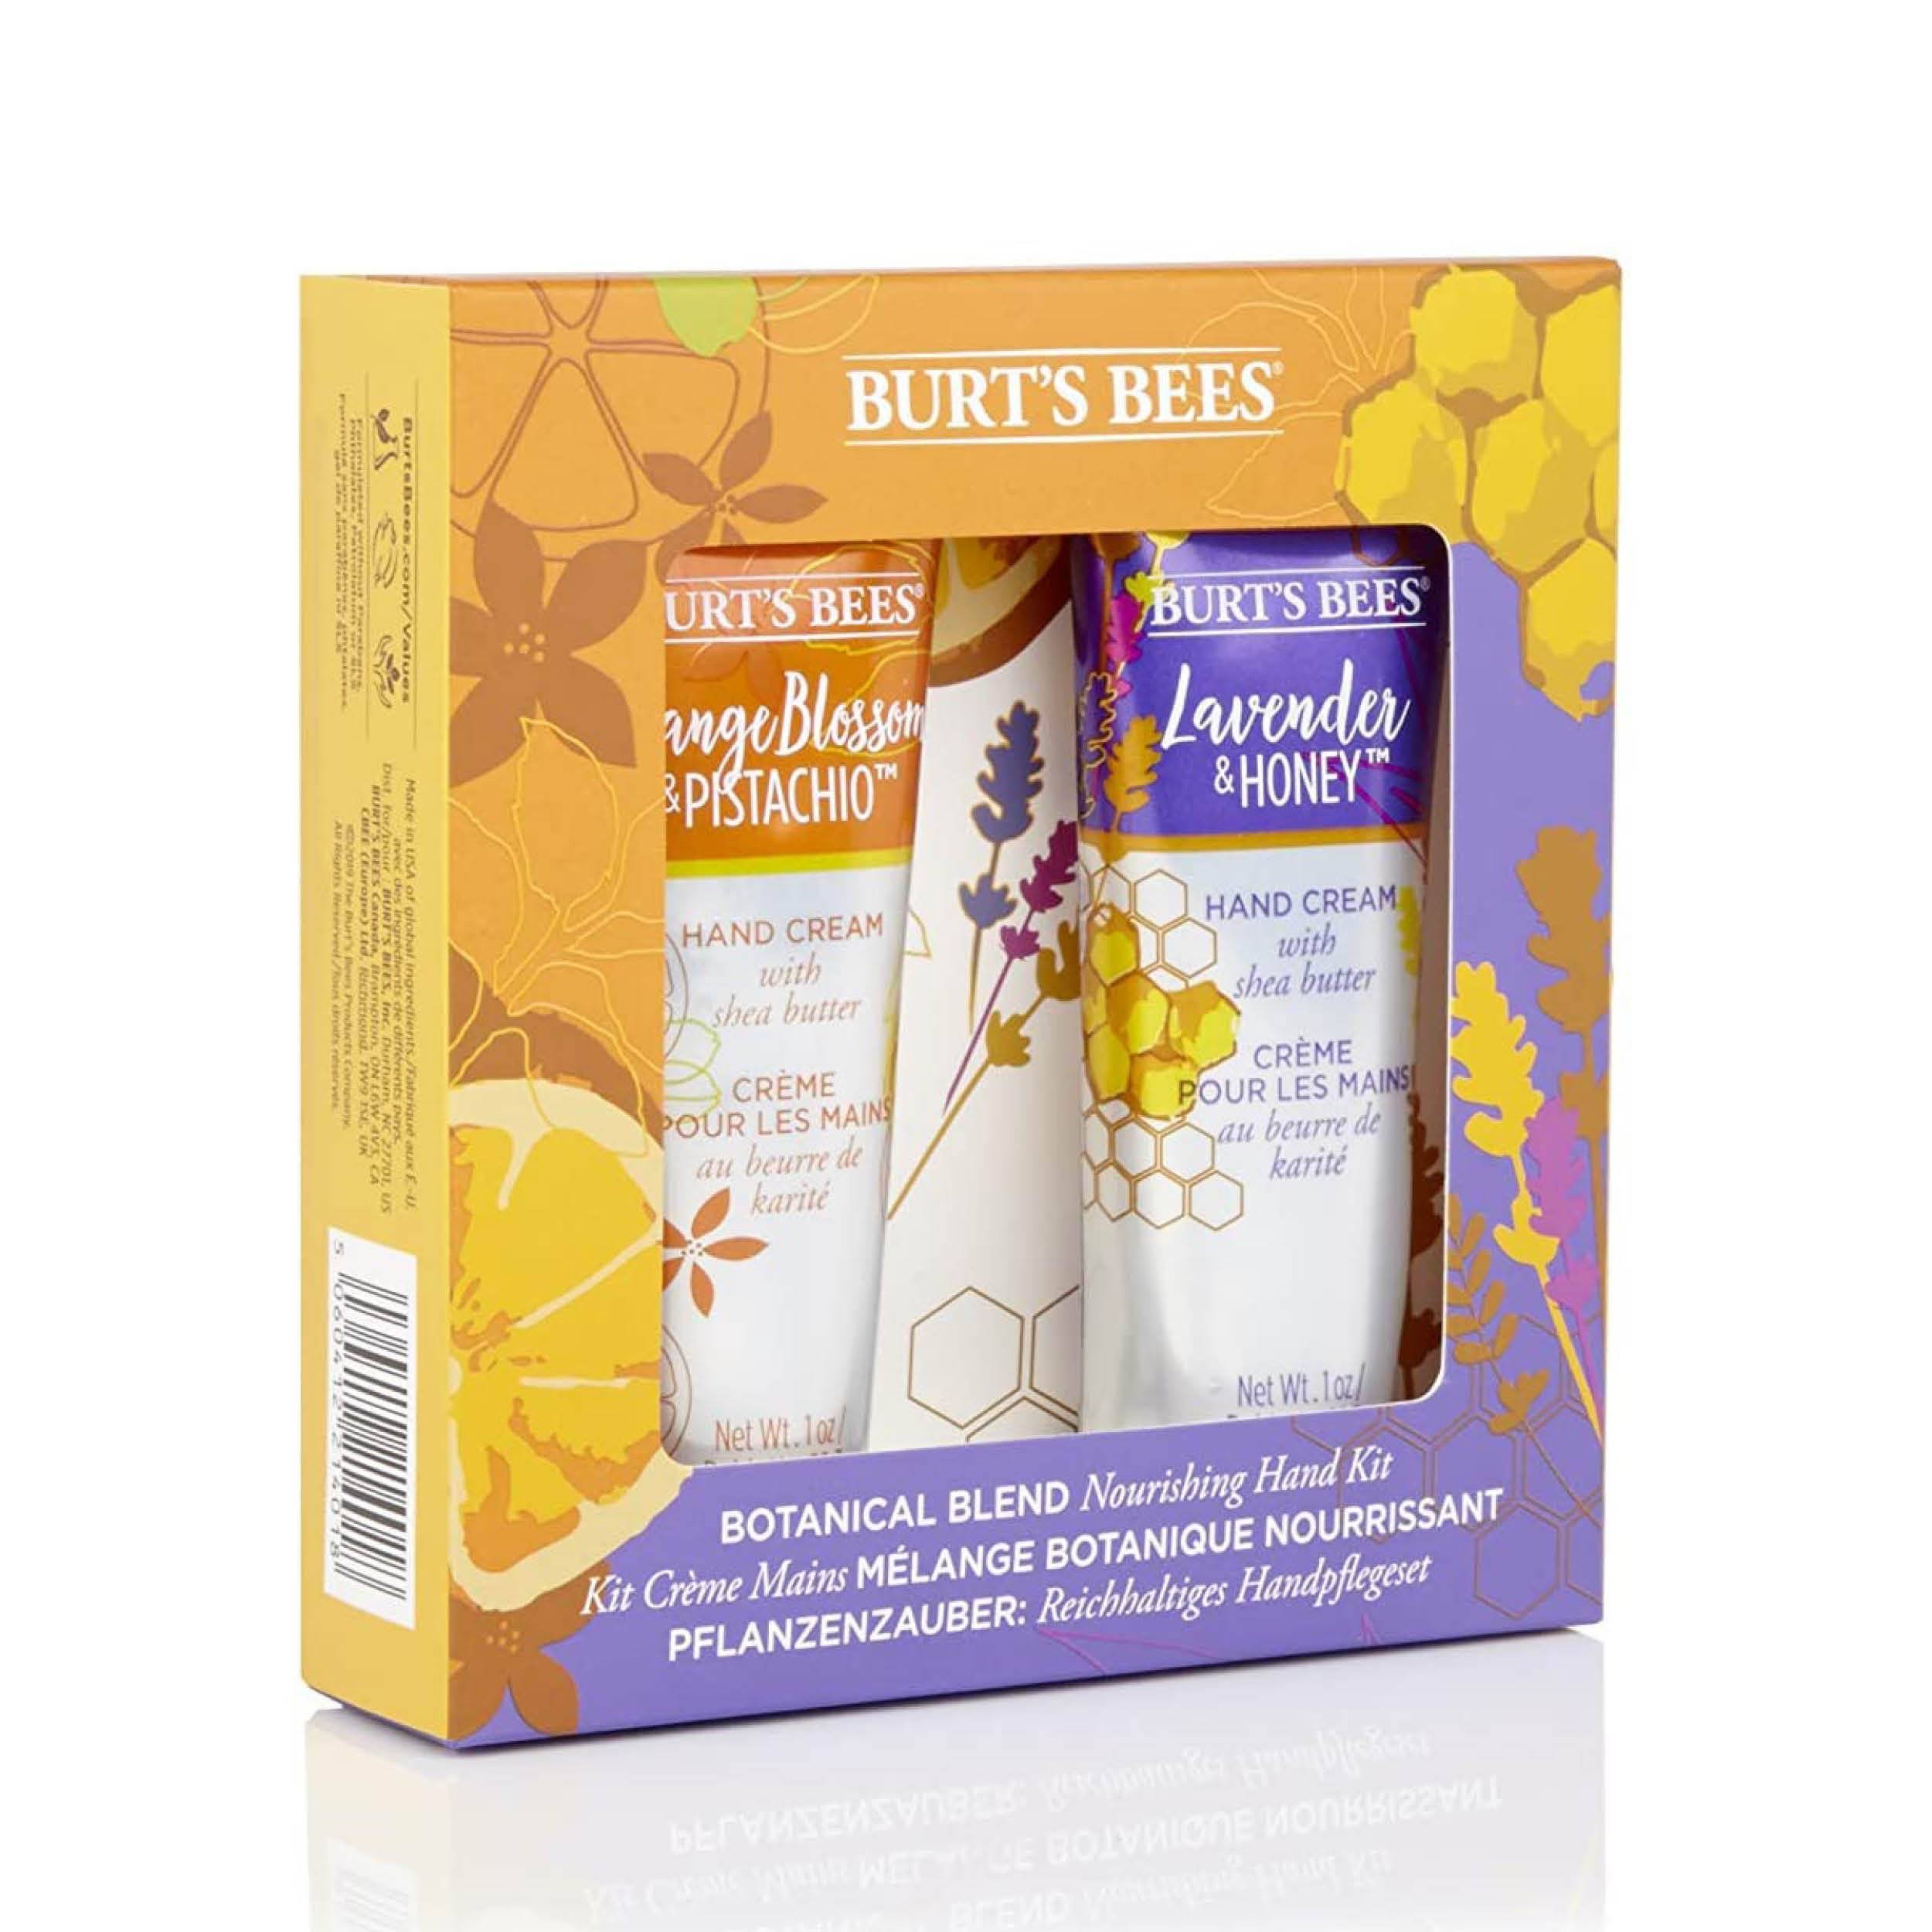 Burt's Bees - Botanical Blend Nourishing Hand Kit